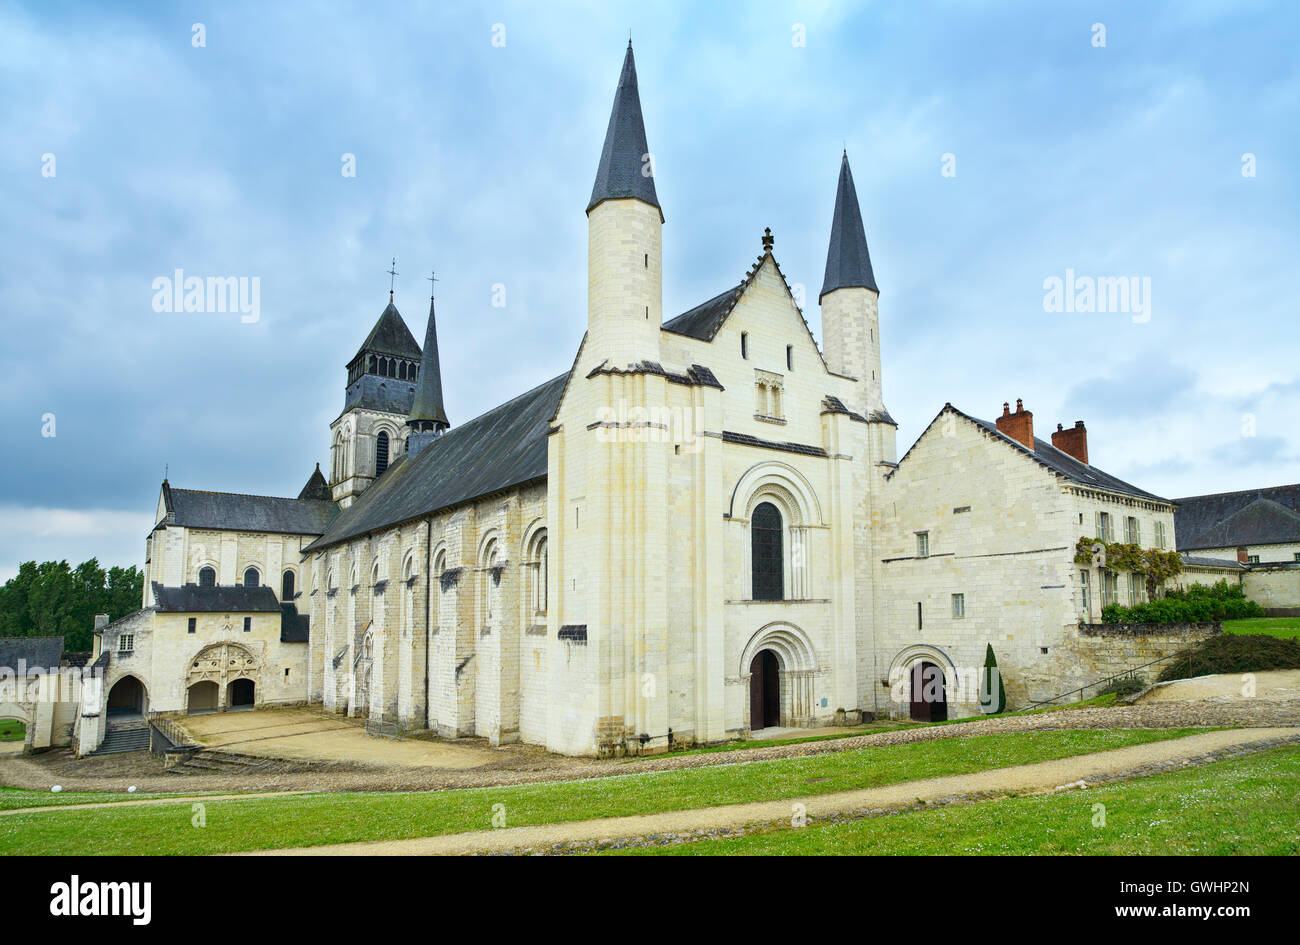 Fontevraud Abbey landmark, west facade church. Religious building. Loire Valley. France, Europe. Stock Photo